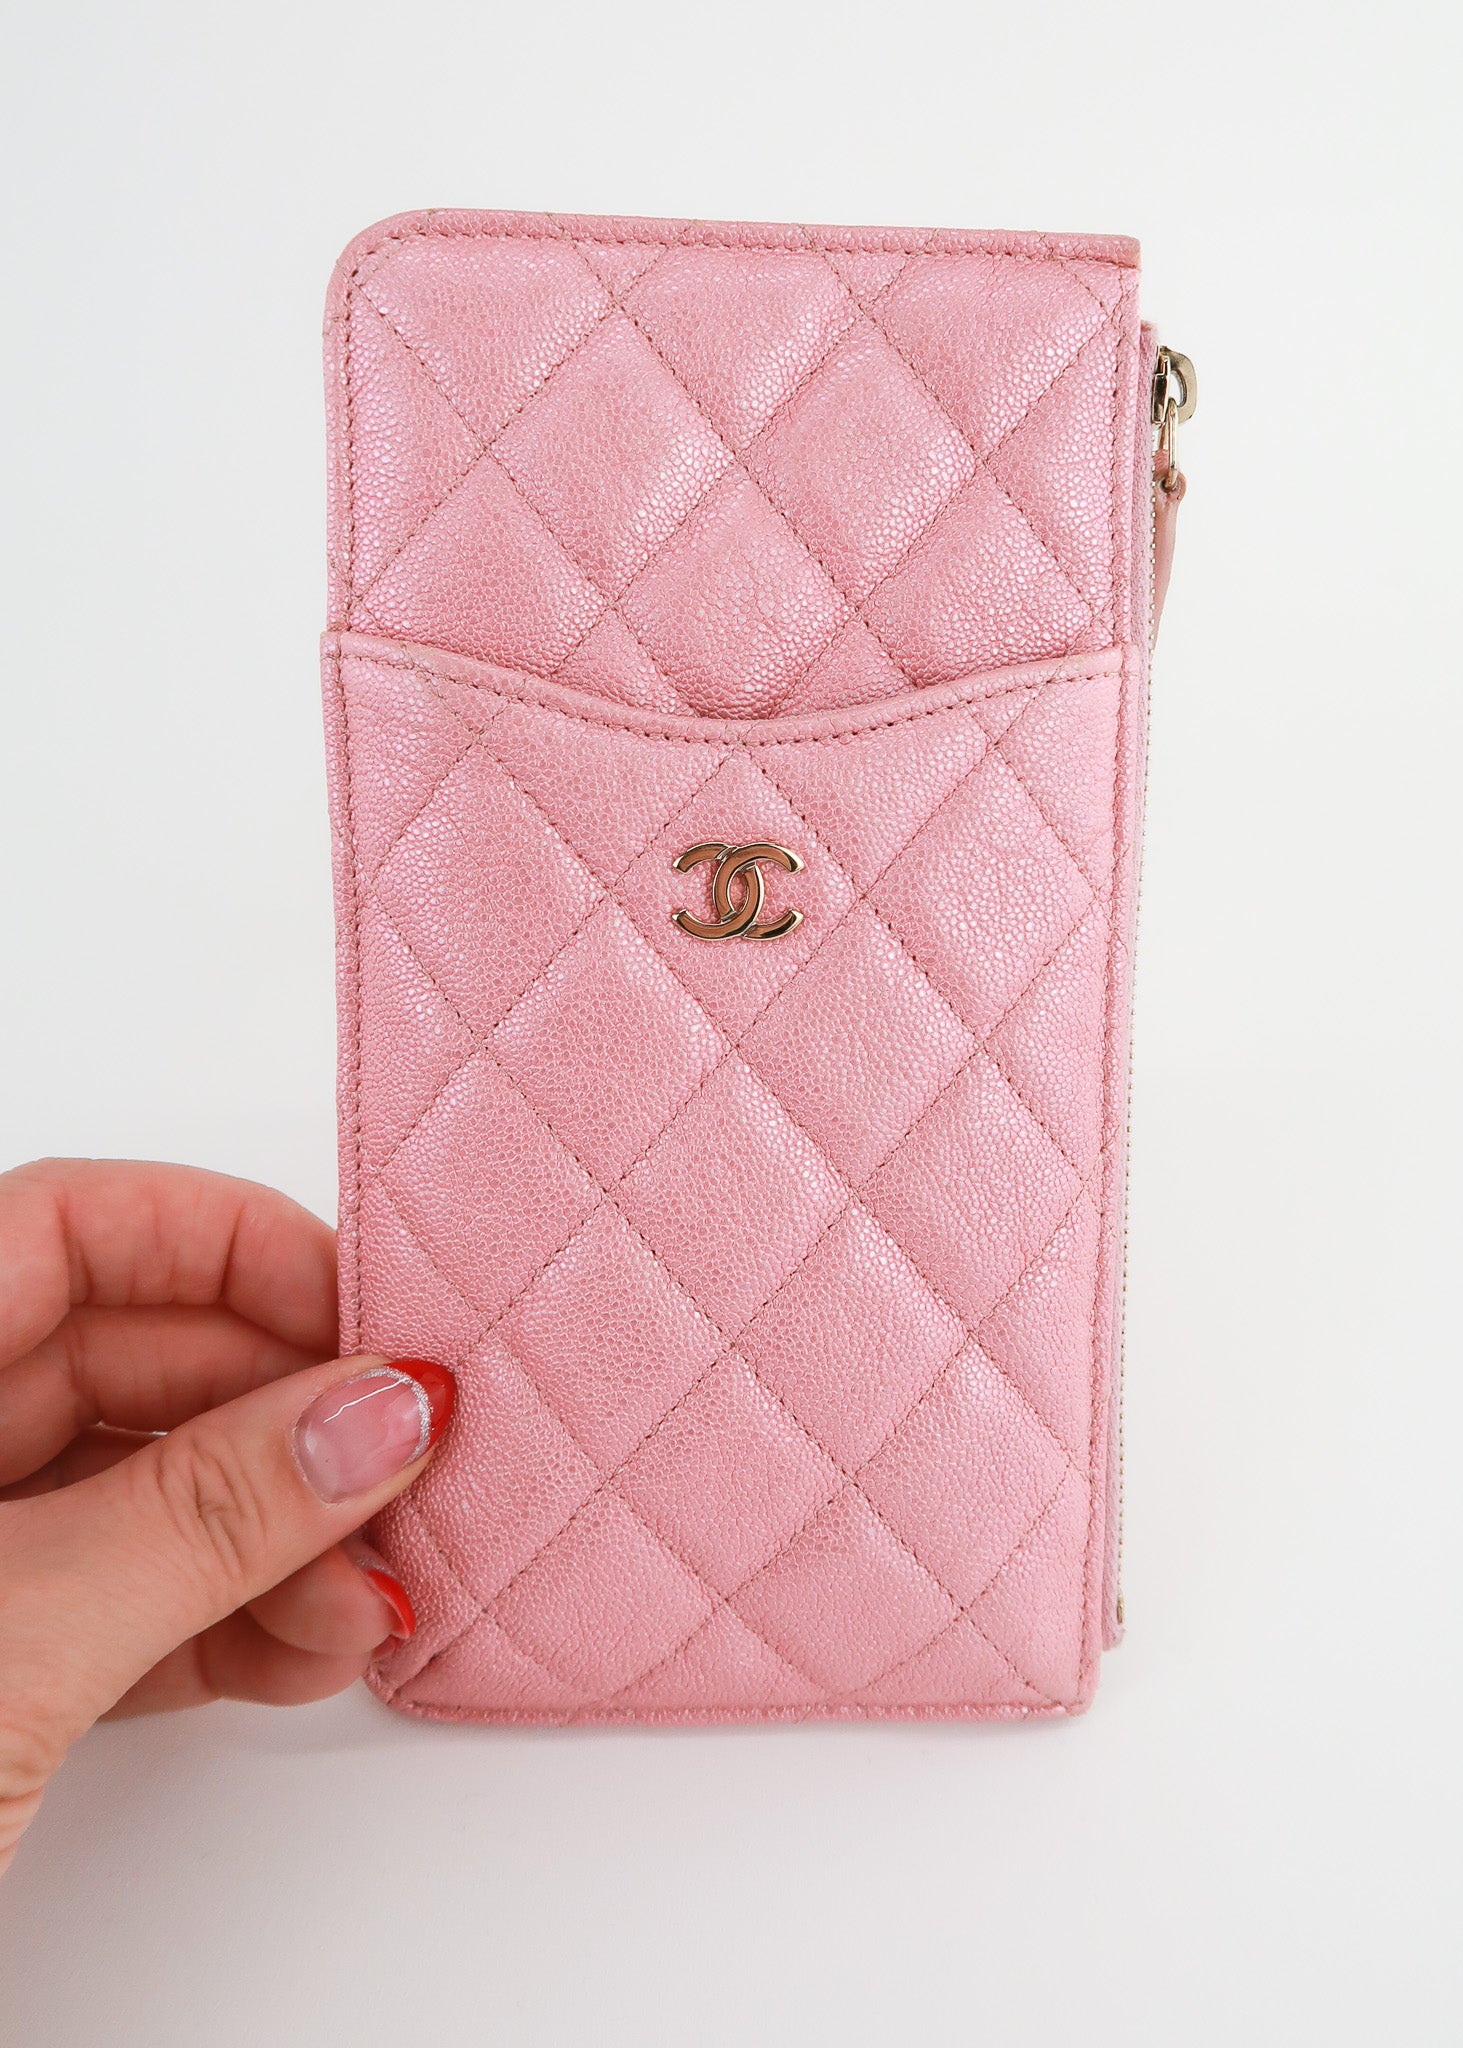 Chanel Iridescent Pink Flat Wallet